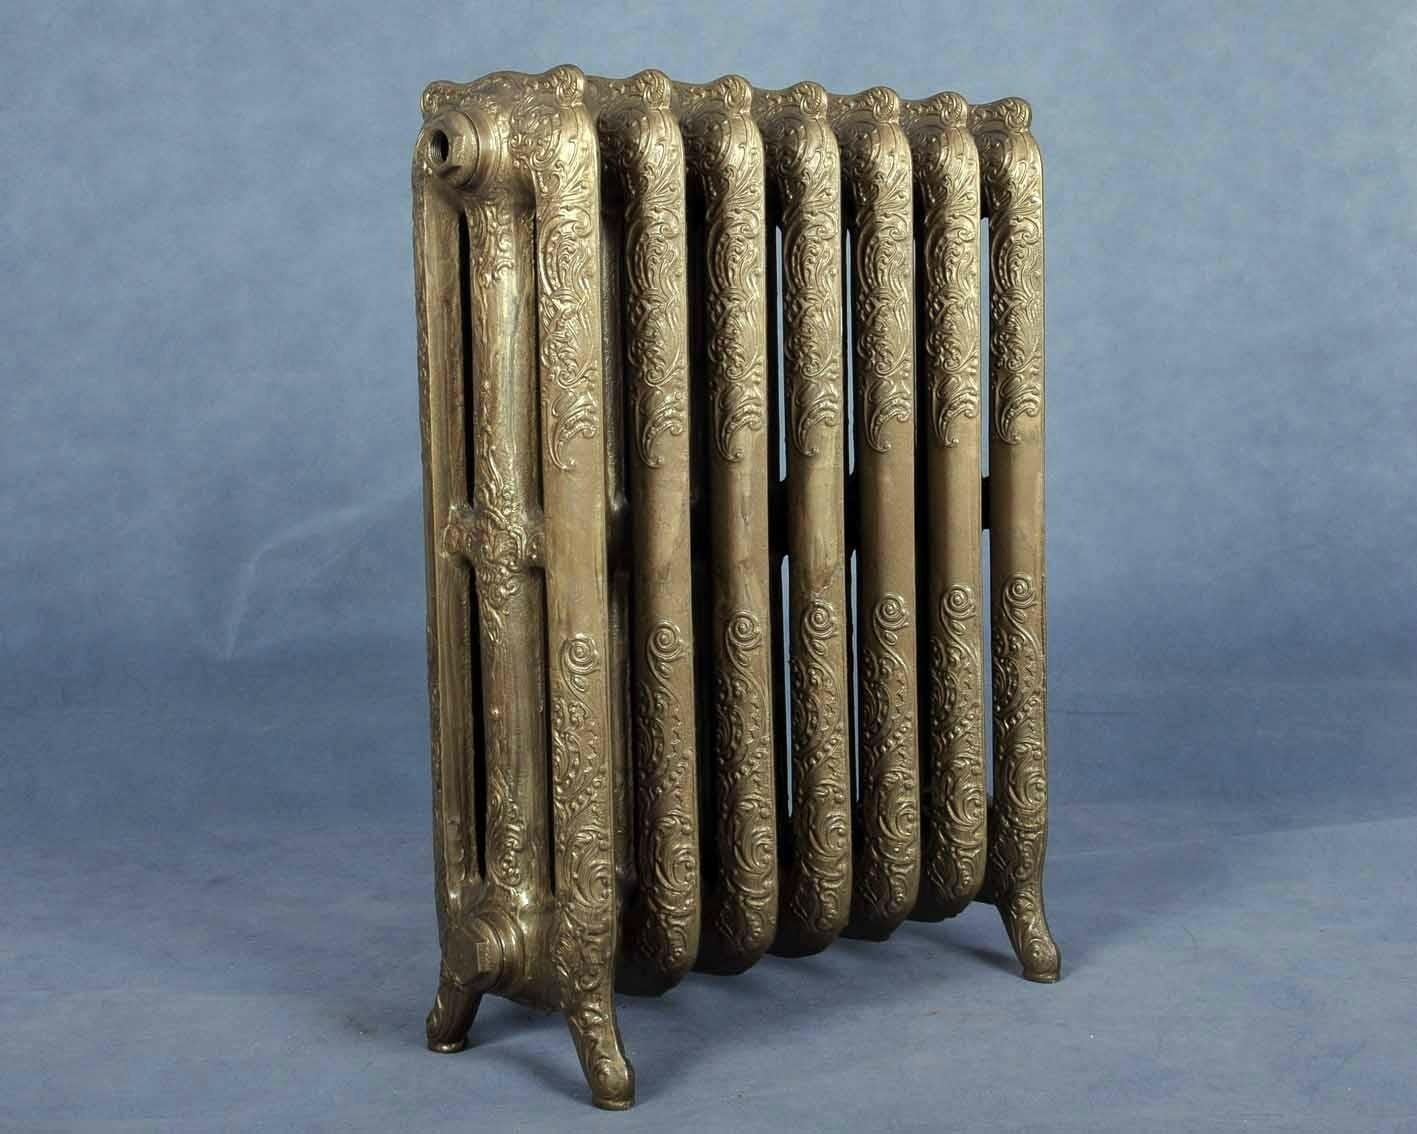 v3-760 cast iron radiator